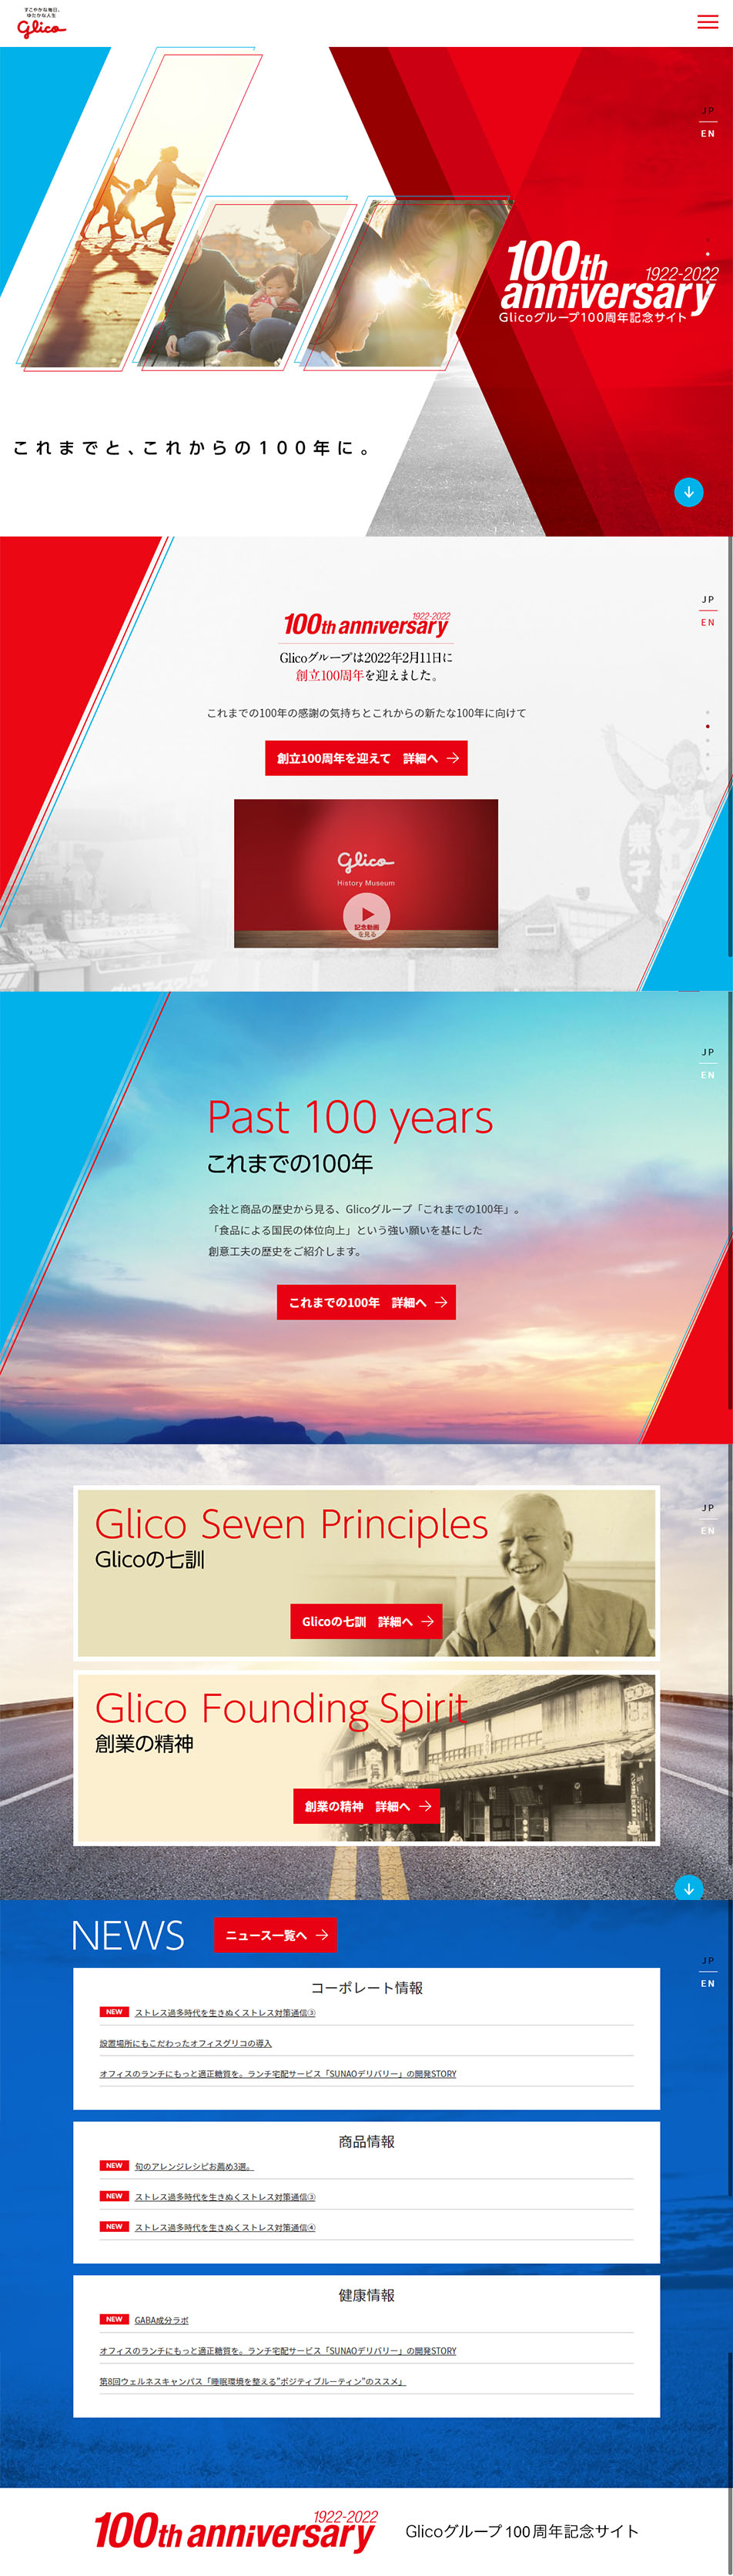 Glicoグループ創立100周年記念_pc_1